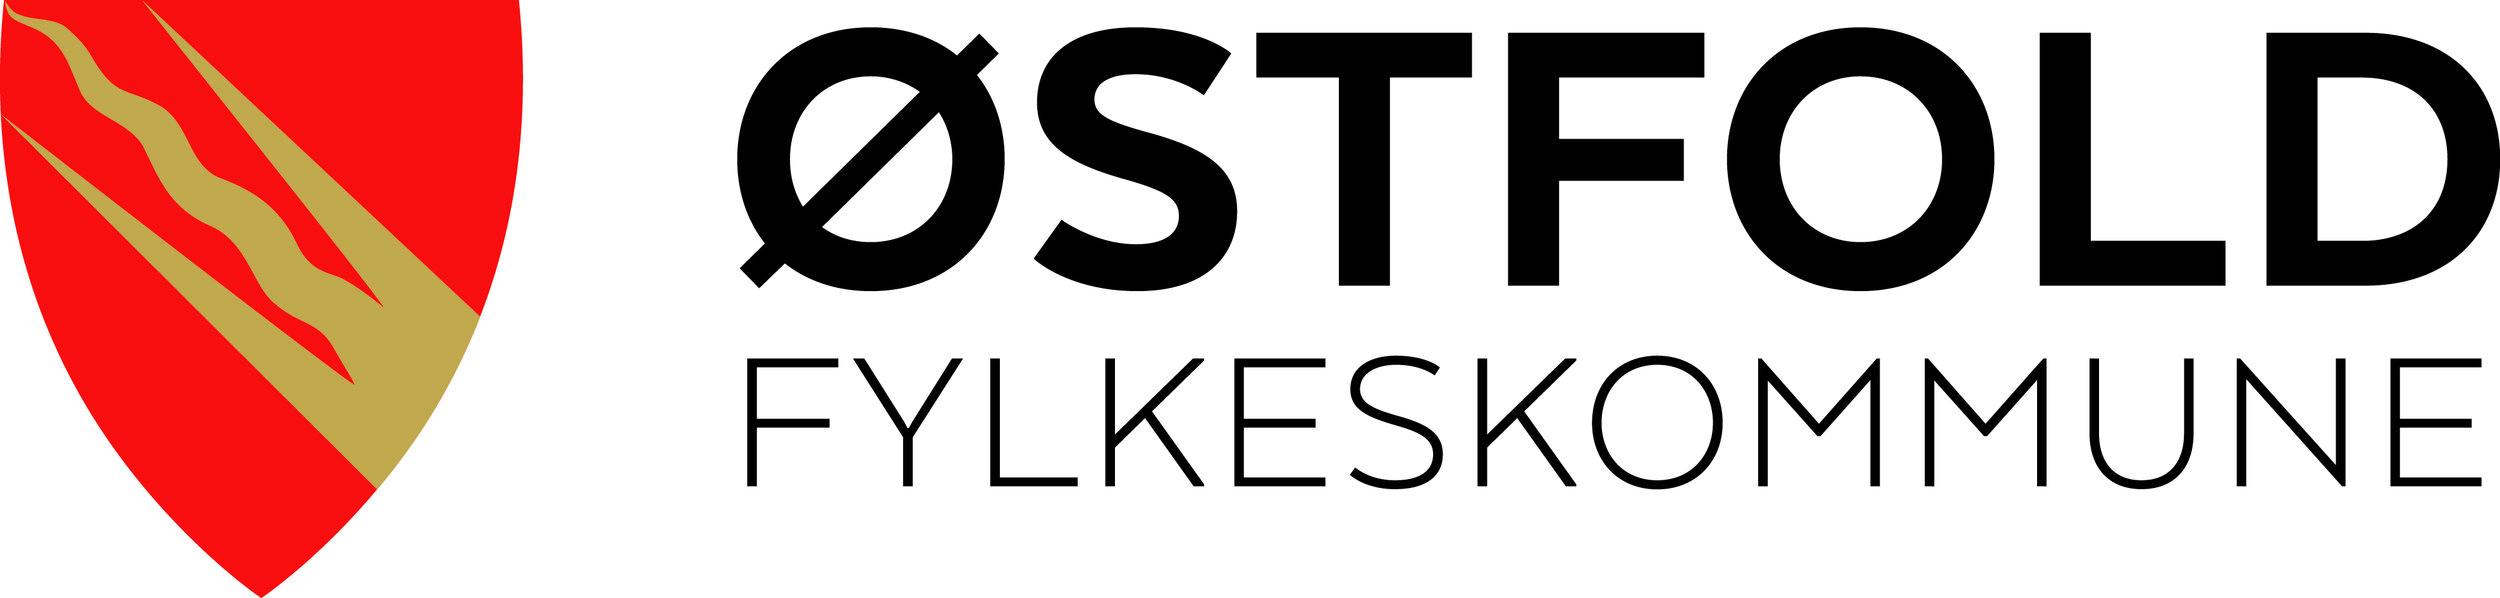 Østfold_fylkeskommune_logo.jpg